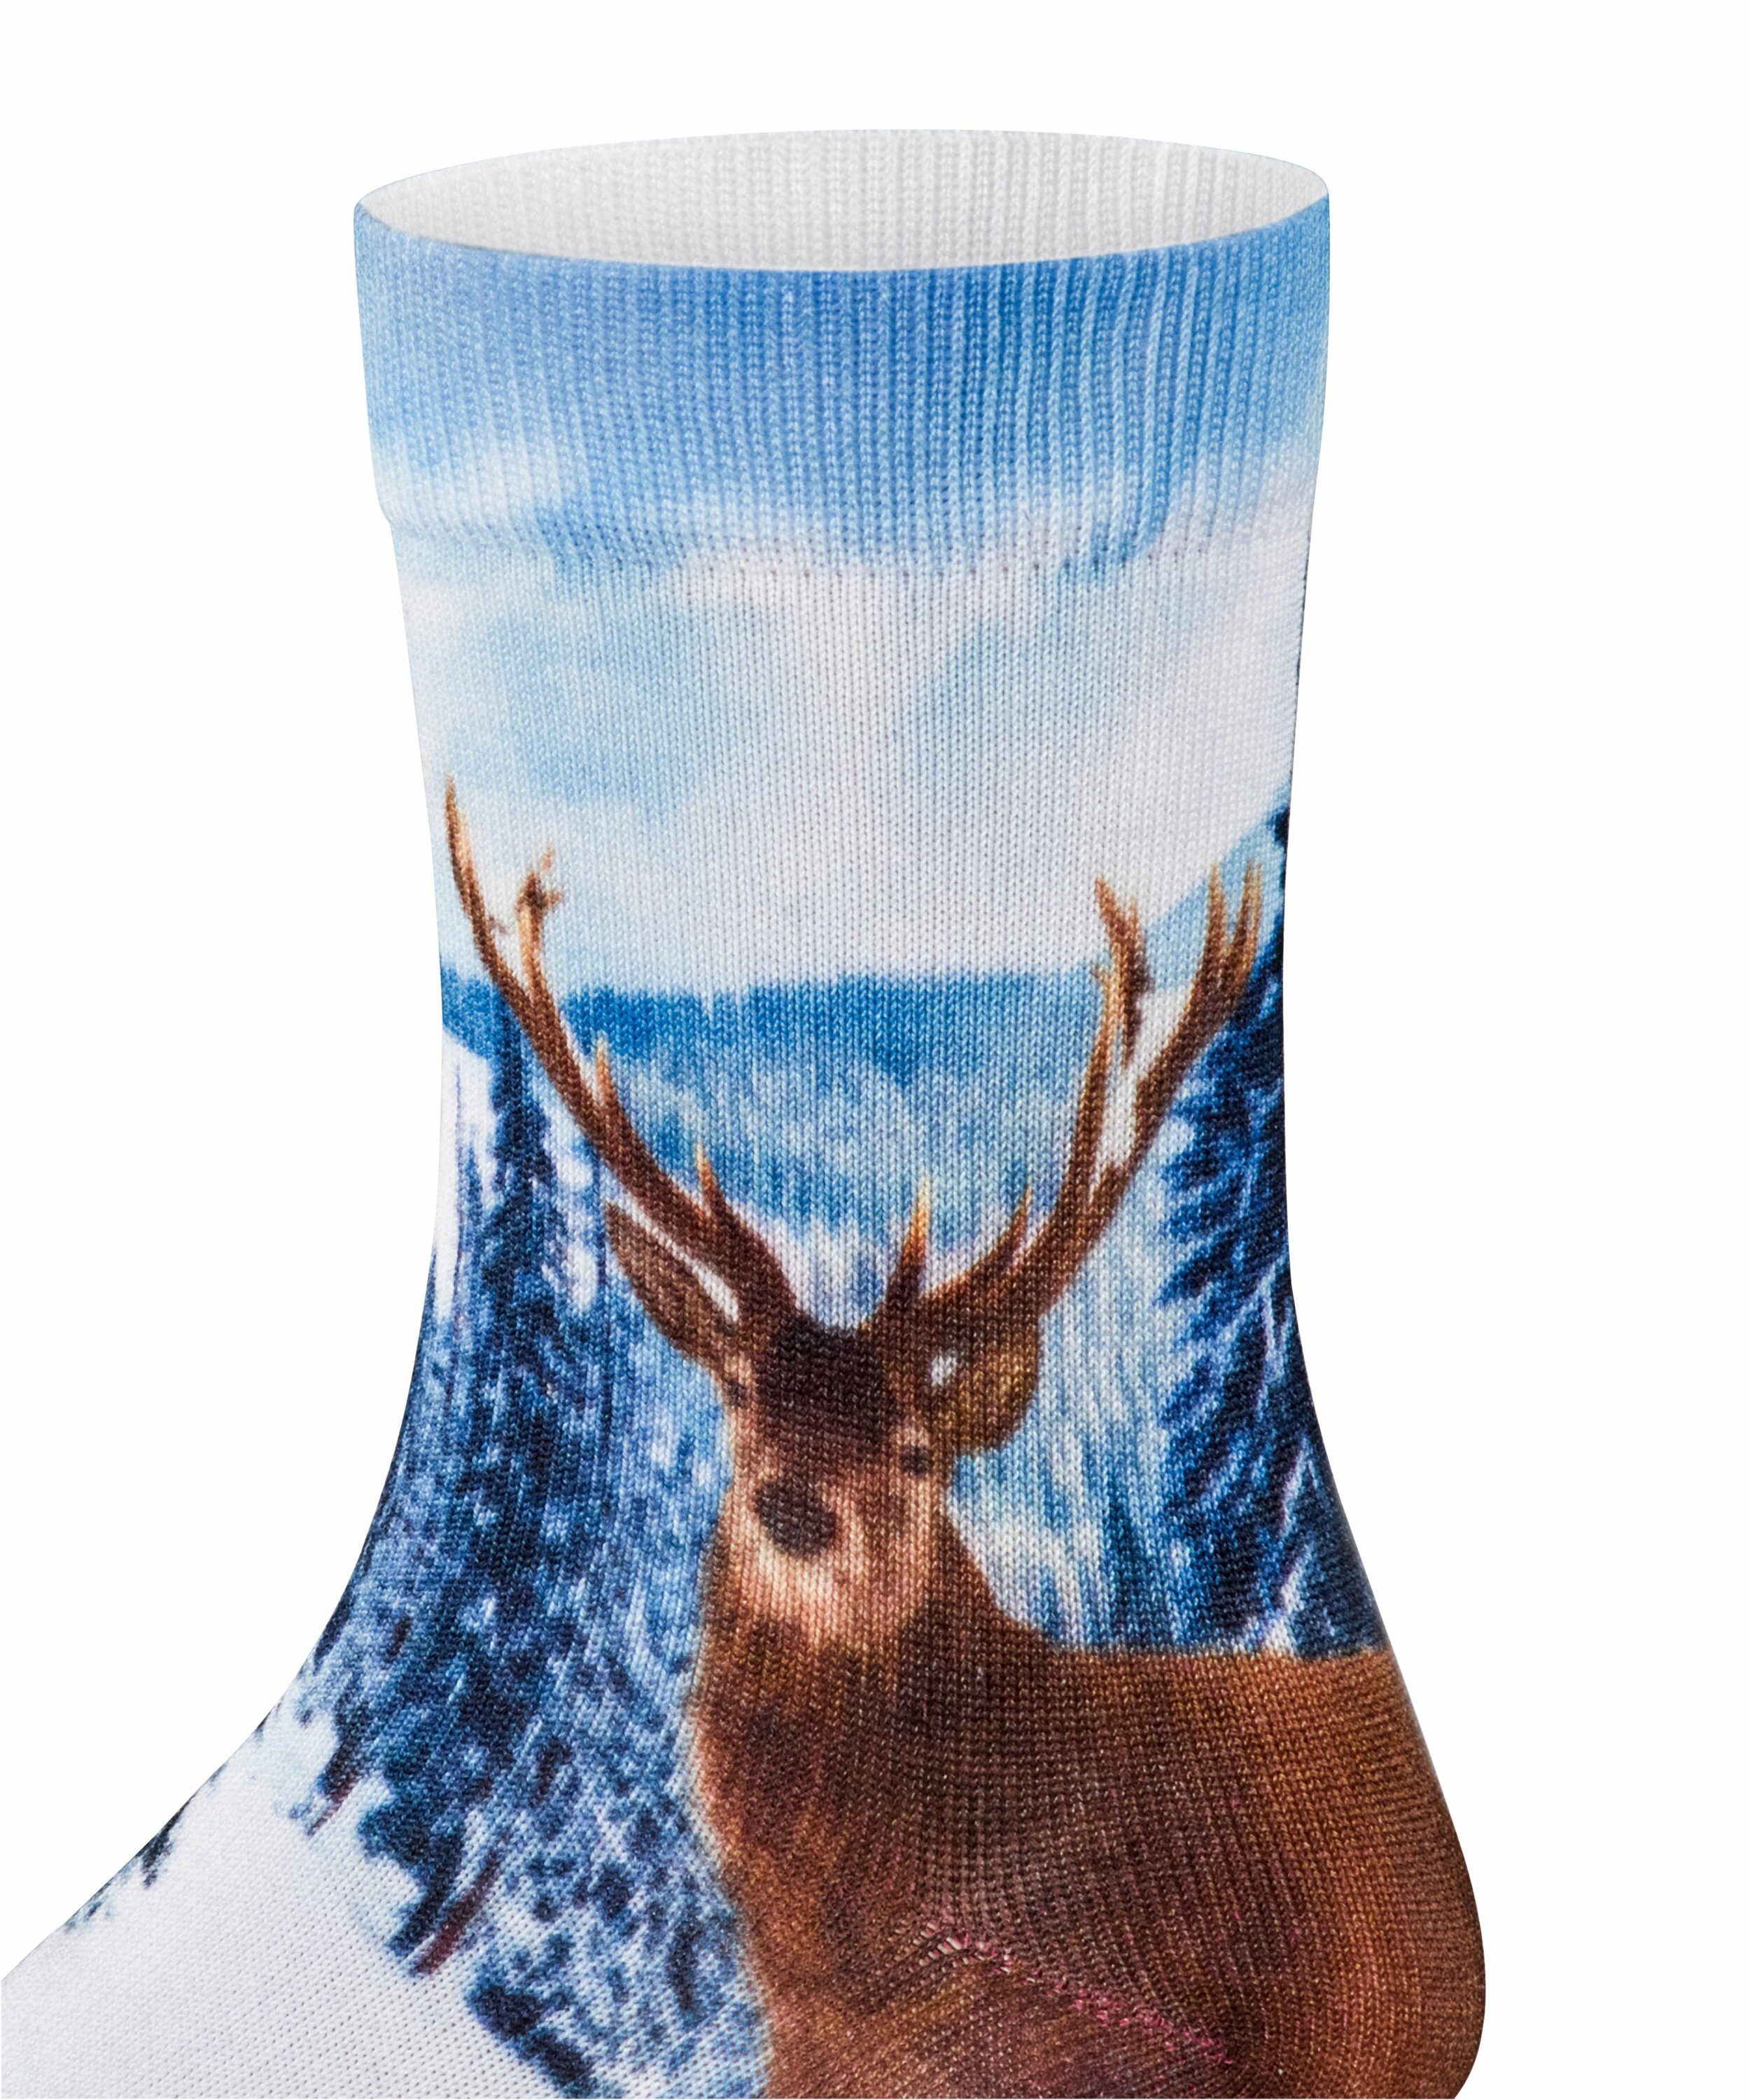 Deer FALKE Print (1-Paar) Socken